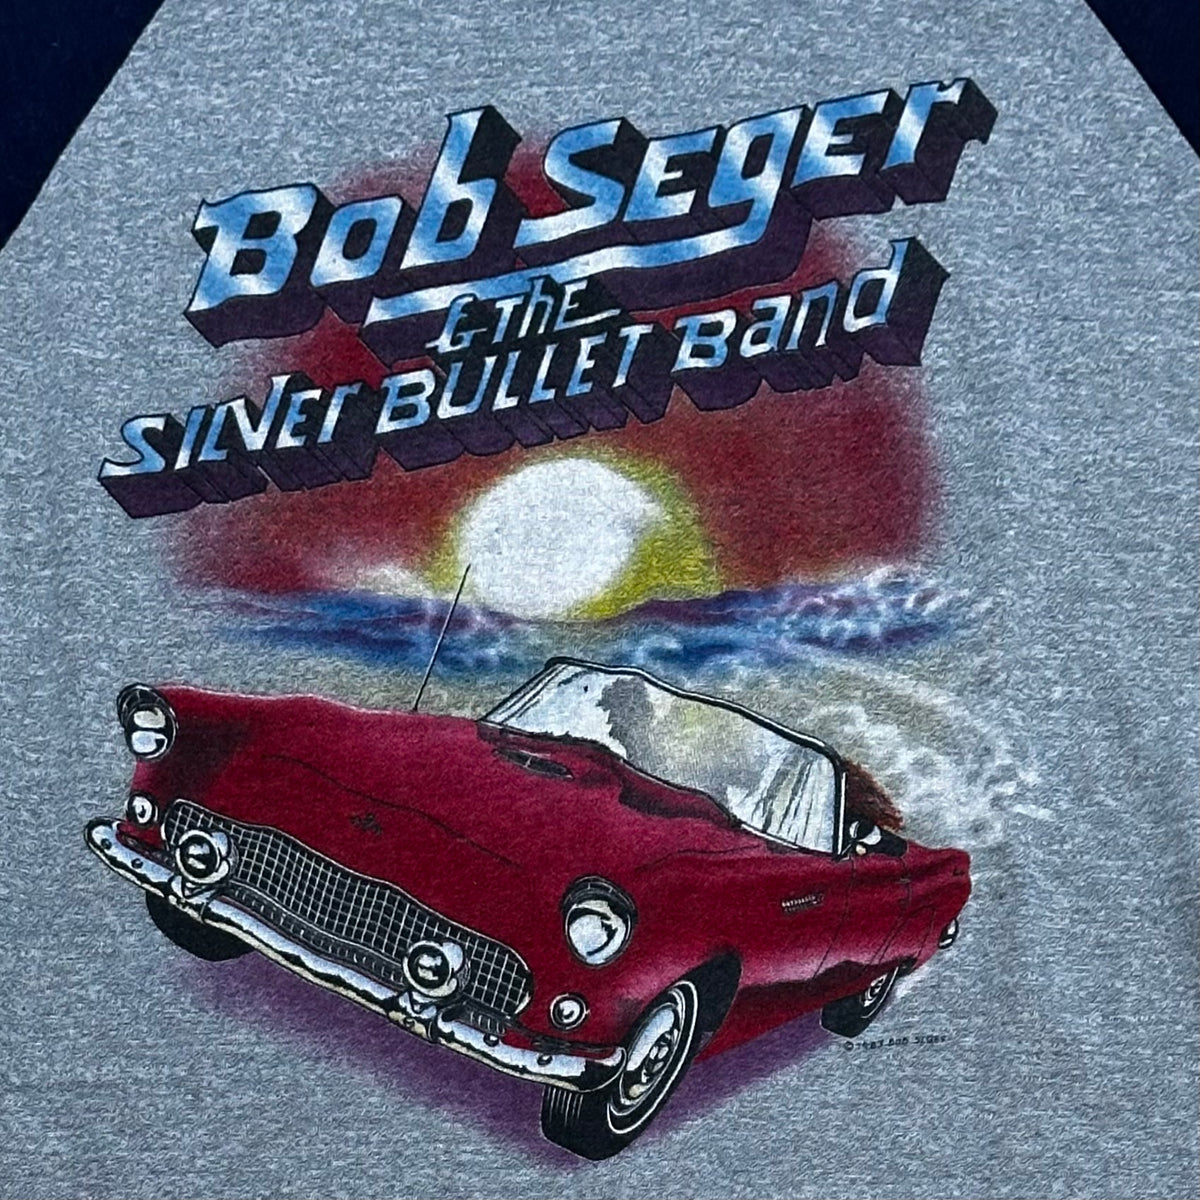 Vintage 1983 Bob Seger & The Silver Bullet Band tee